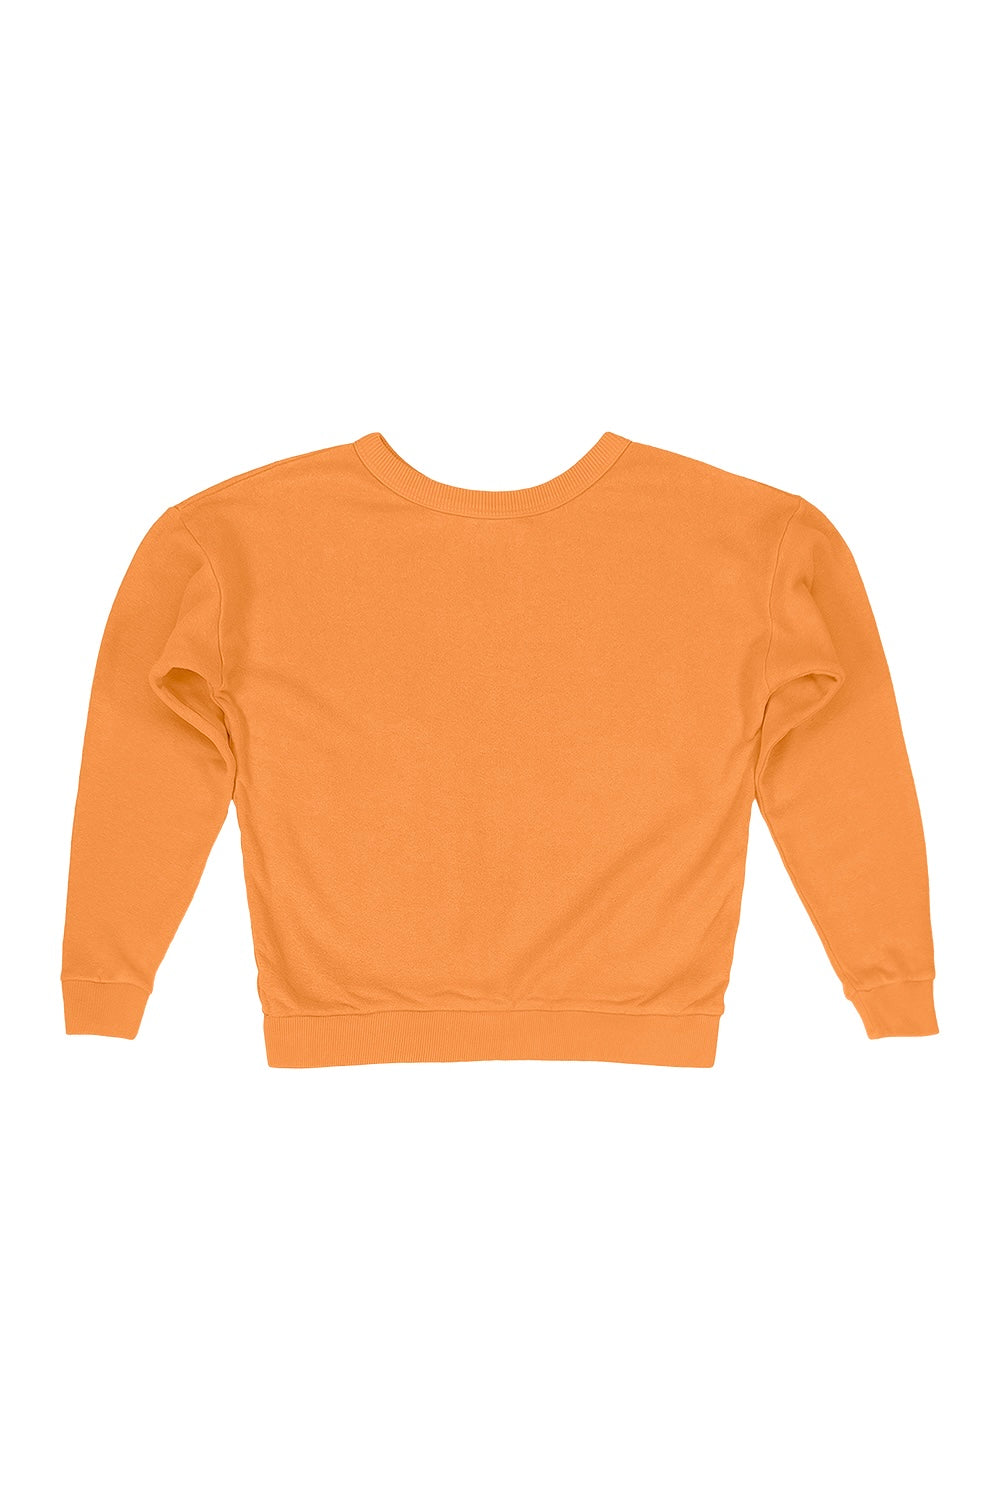 Crux Cropped Sweatshirt | Jungmaven Hemp Clothing & Accessories / Color: Apricot Crush